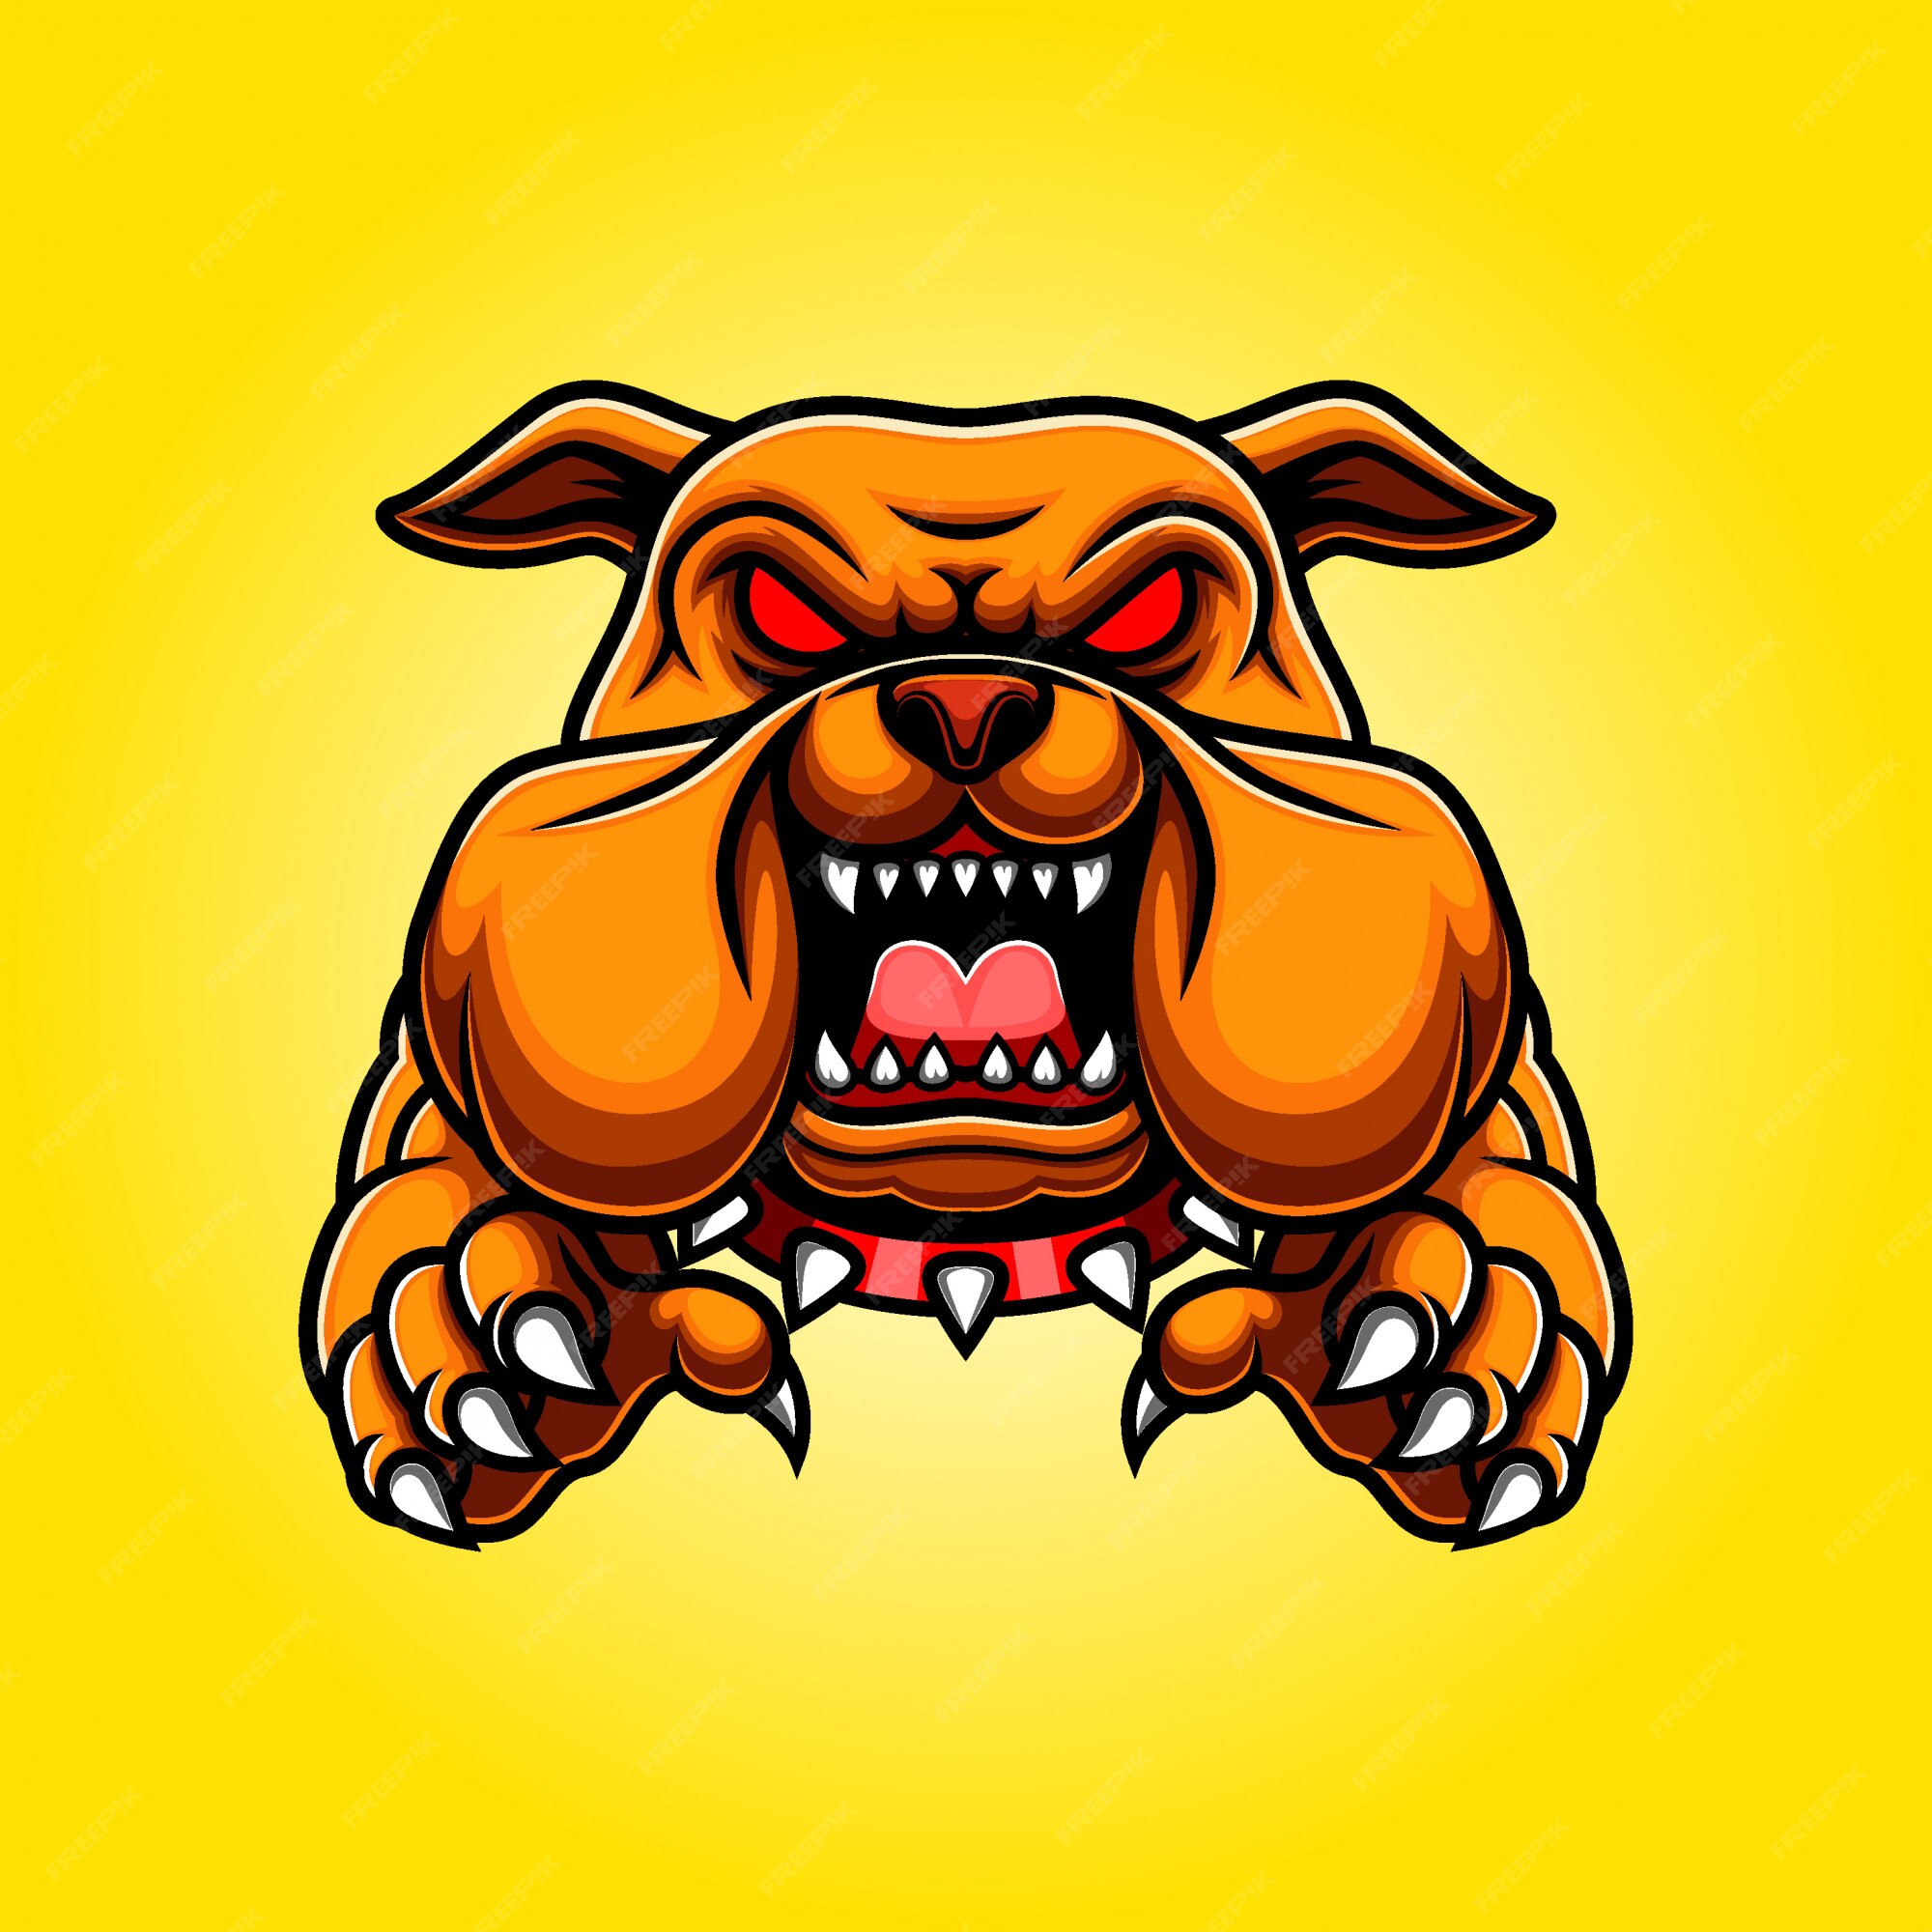 Angry Dog Cartoon Images - Free Download on Freepik